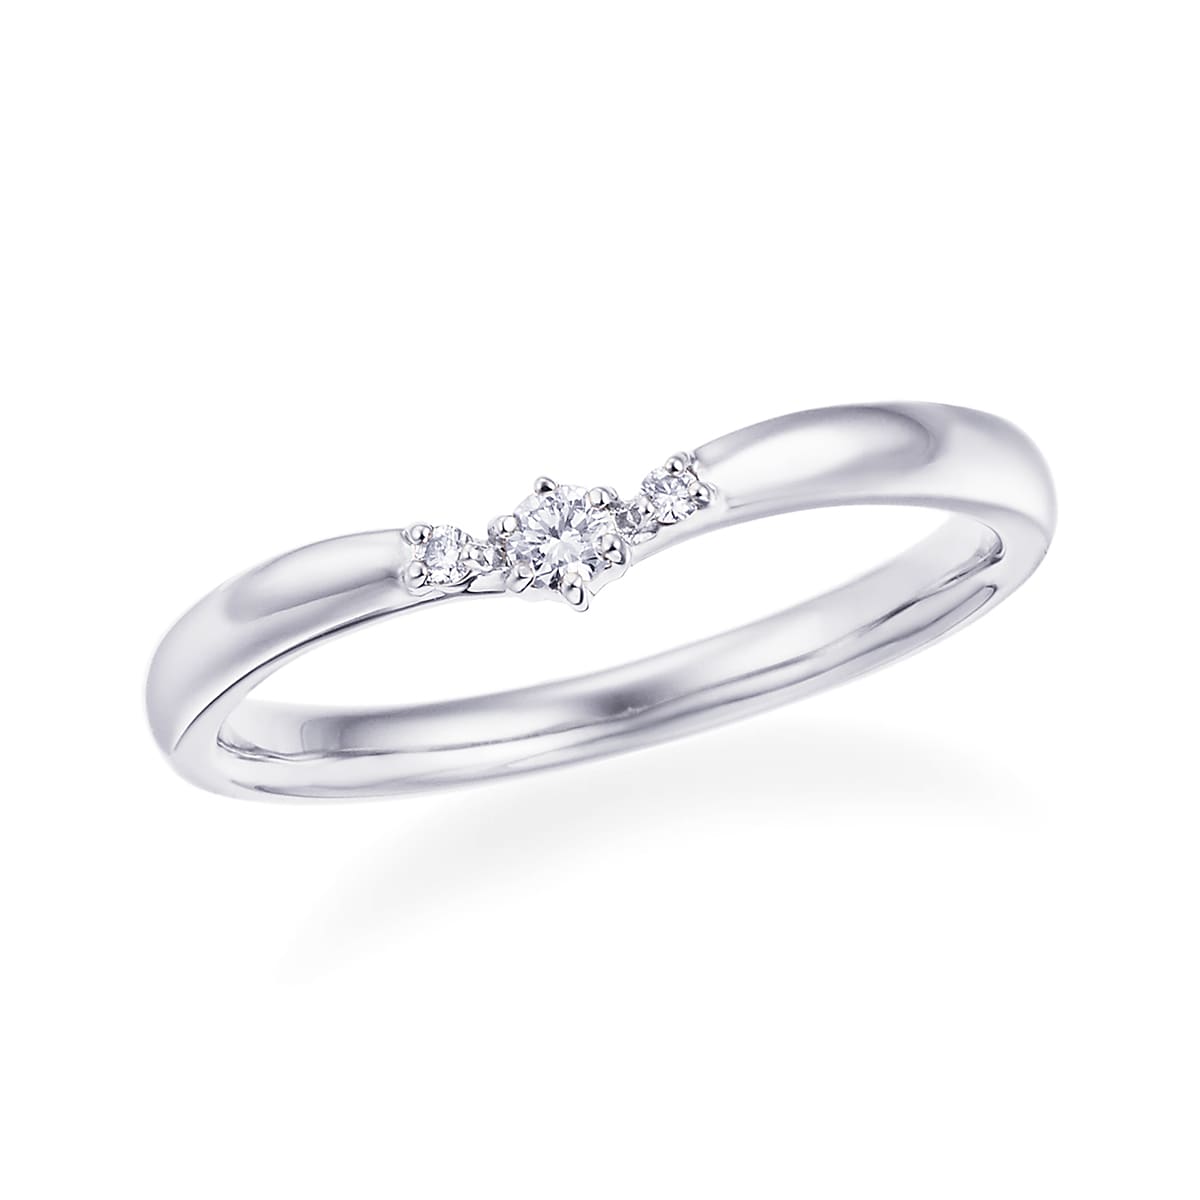 Pt900 ジュエリーツツミ 結婚指輪 マリッジリング プラチナ 